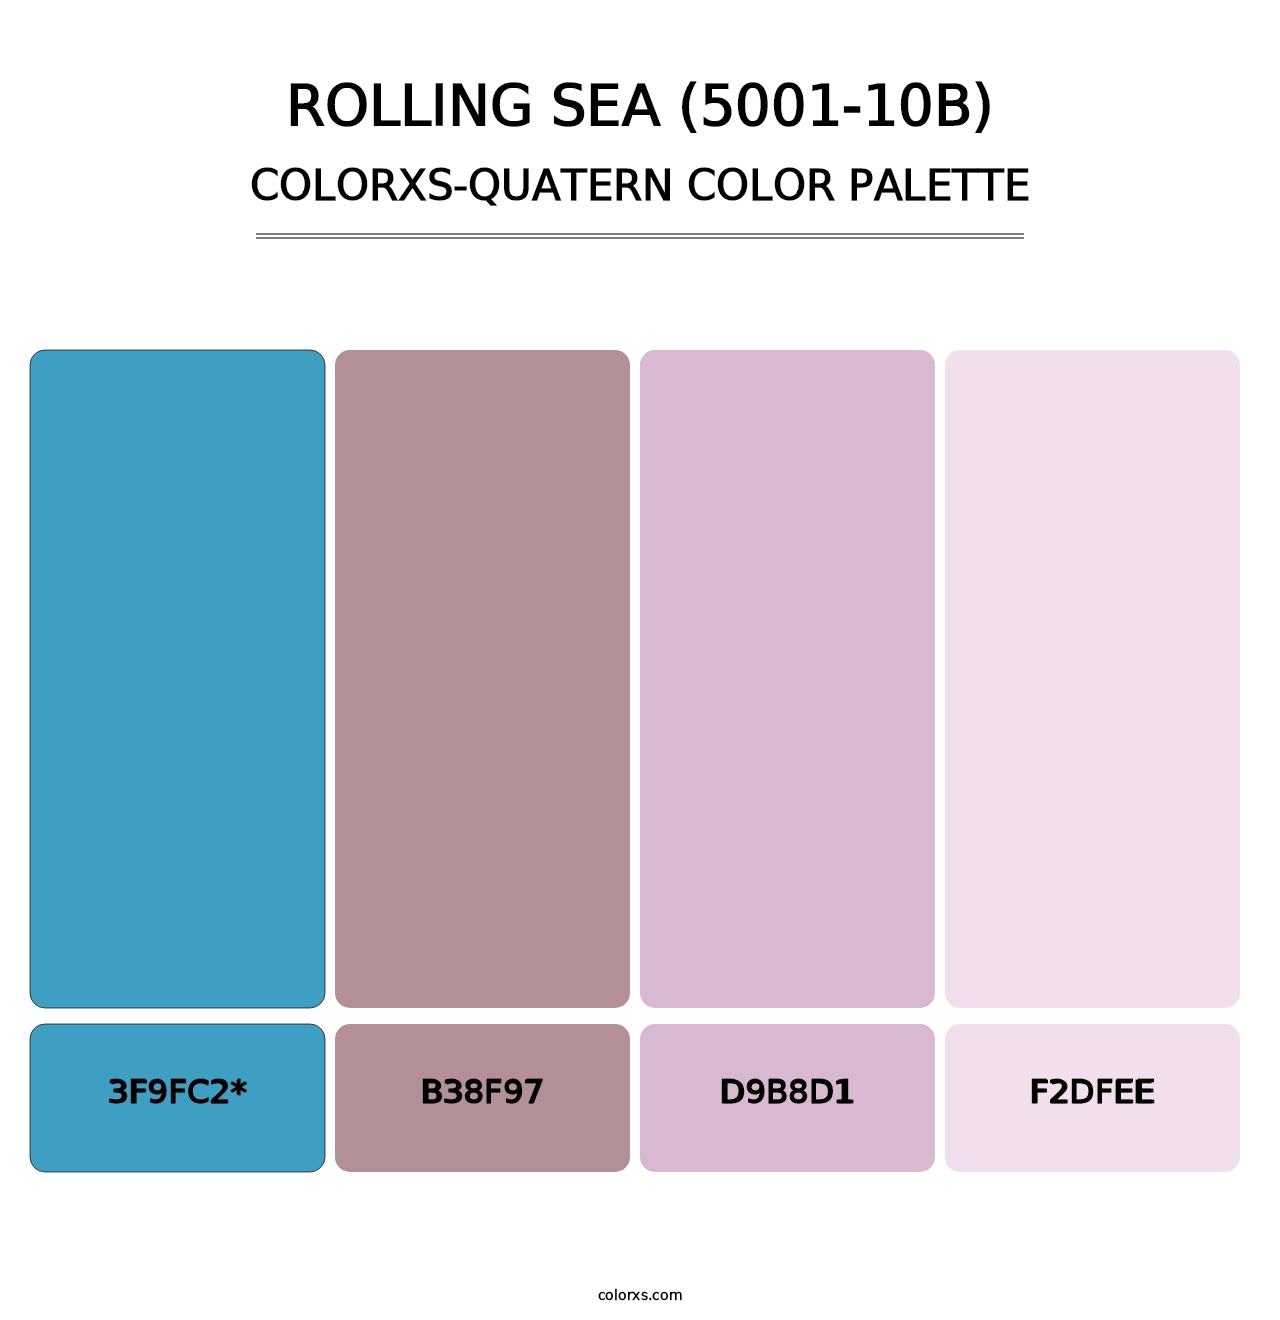 Rolling Sea (5001-10B) - Colorxs Quatern Palette